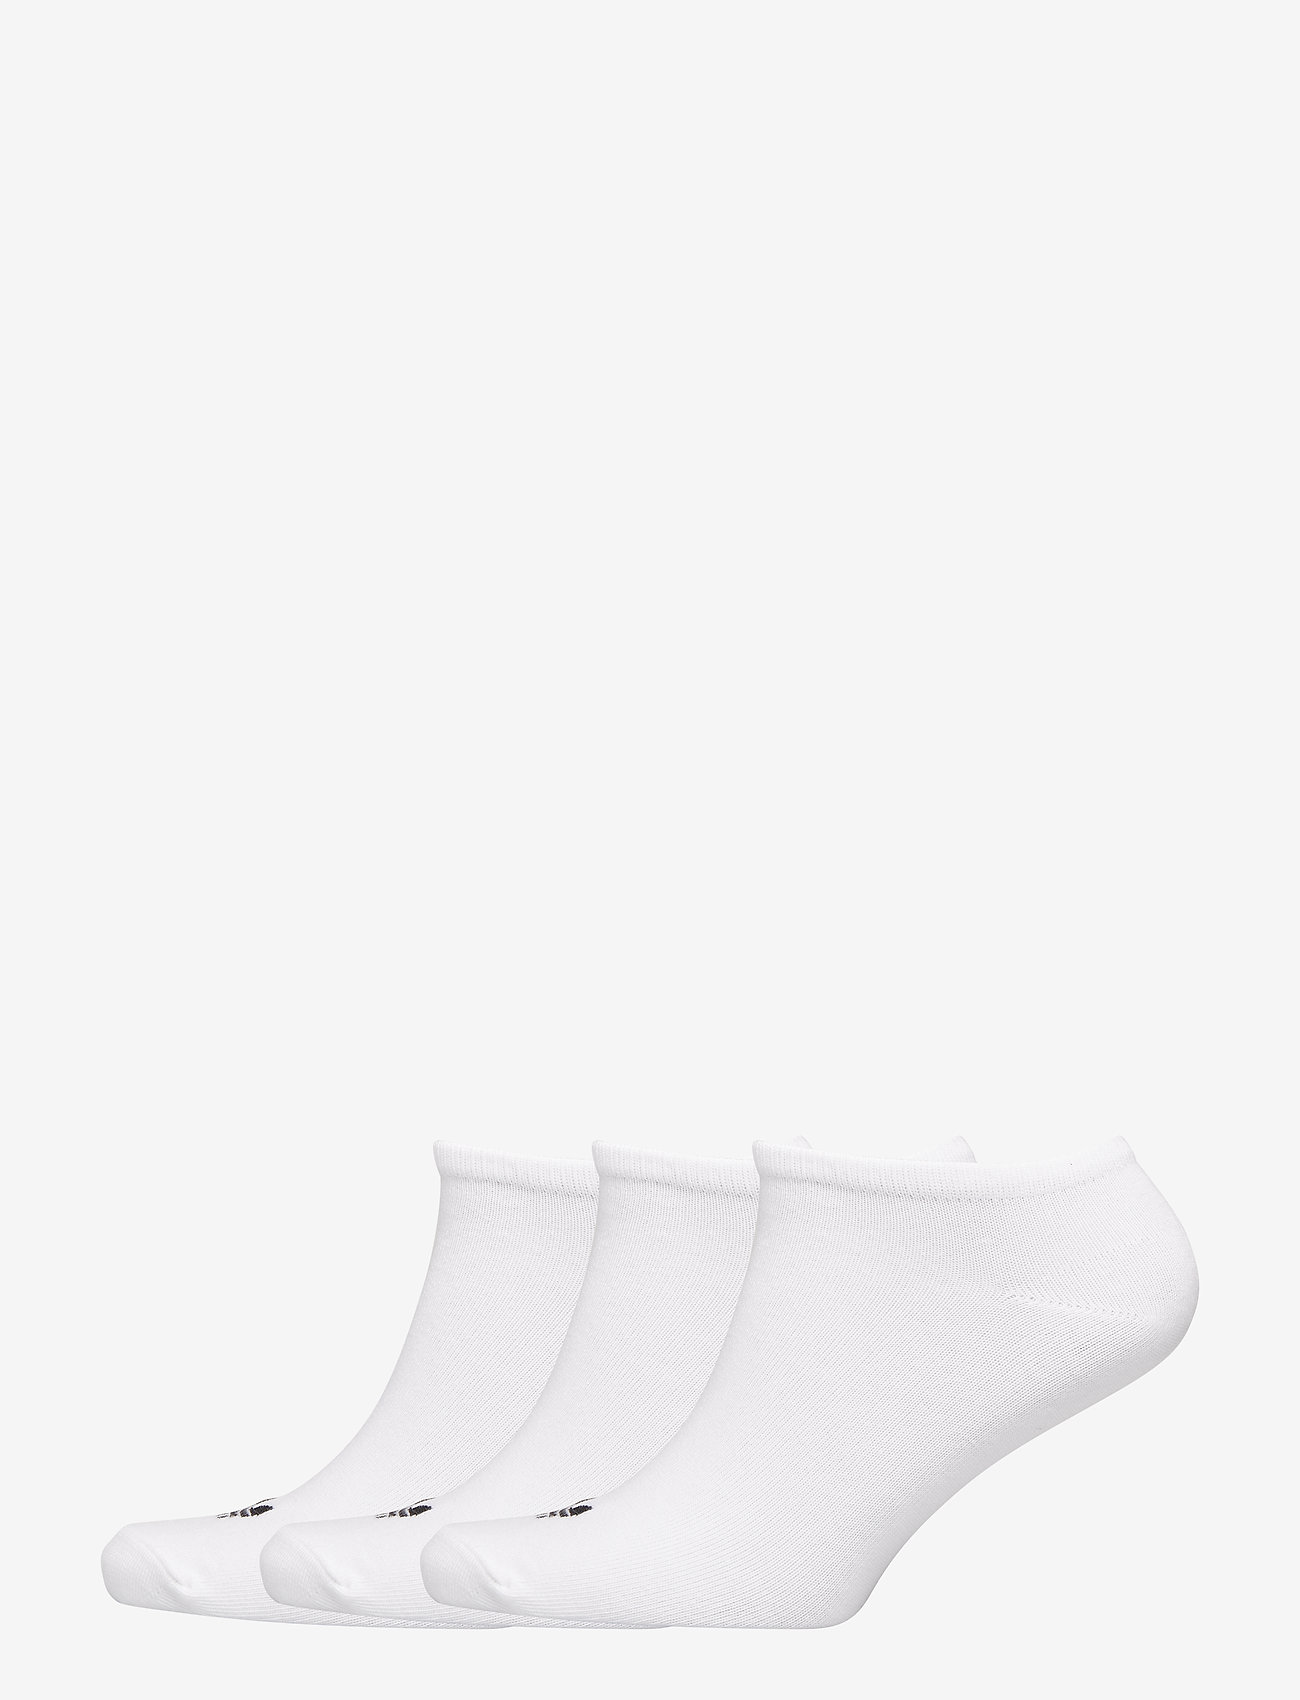 adidas Originals - TREFOIL LINER SOCK 3 PAIR PACK - ankelstrumpor - white/white/black - 0